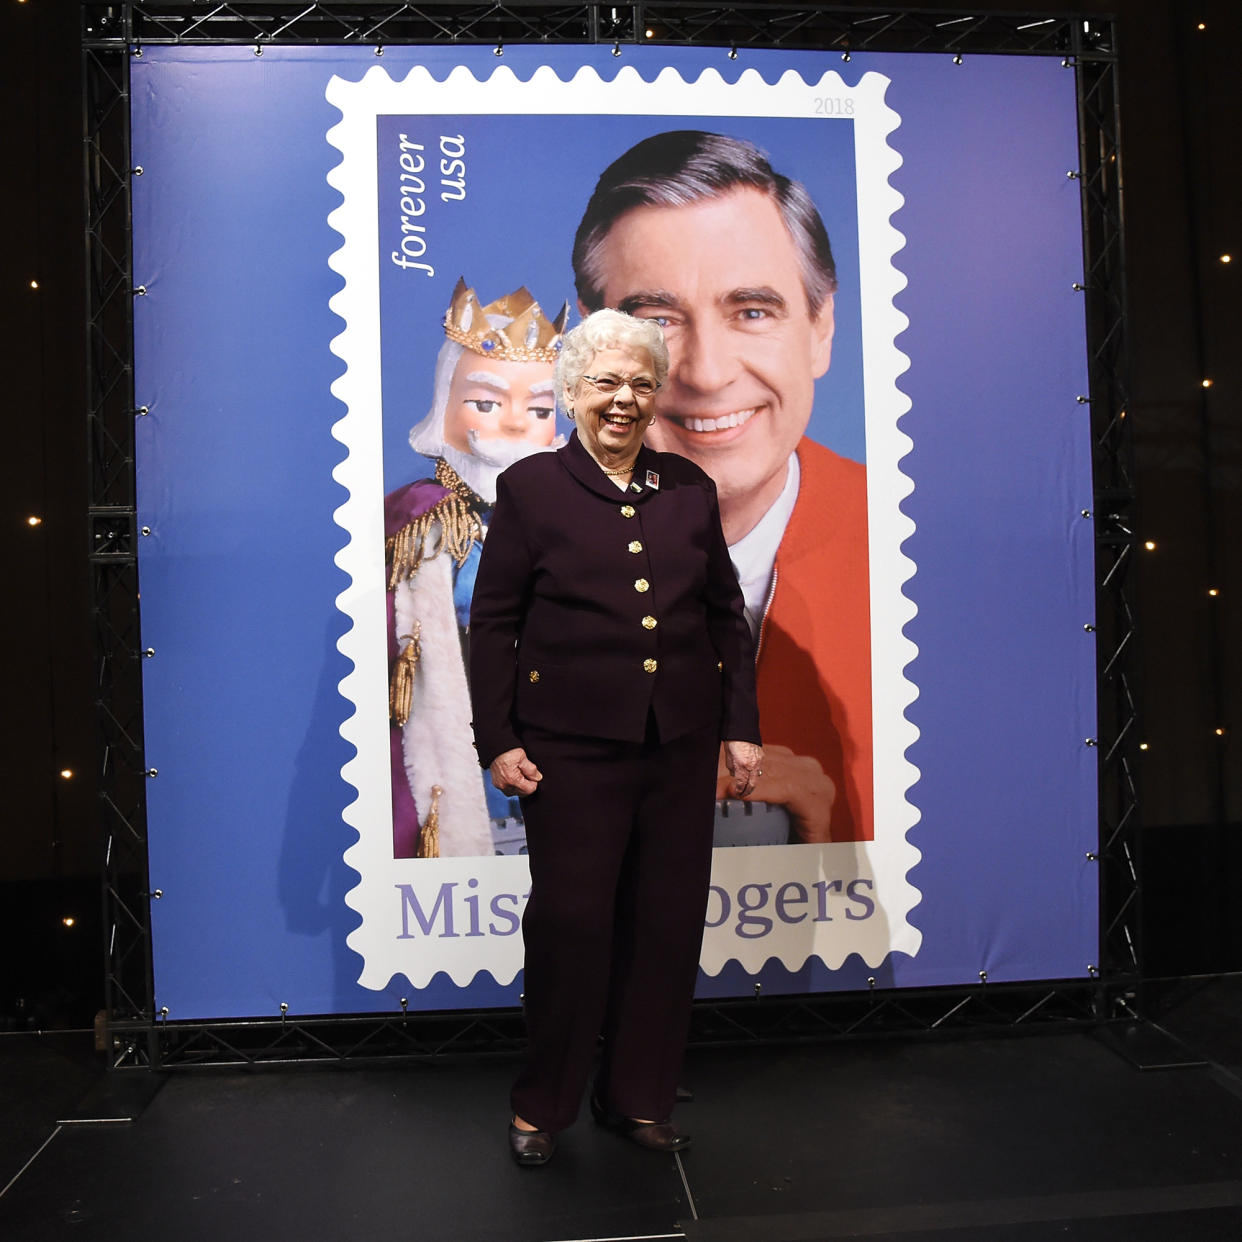 U.S. Postal Service dedicates Mister Rogers forever stamp (Jason Merritt / Getty Images)